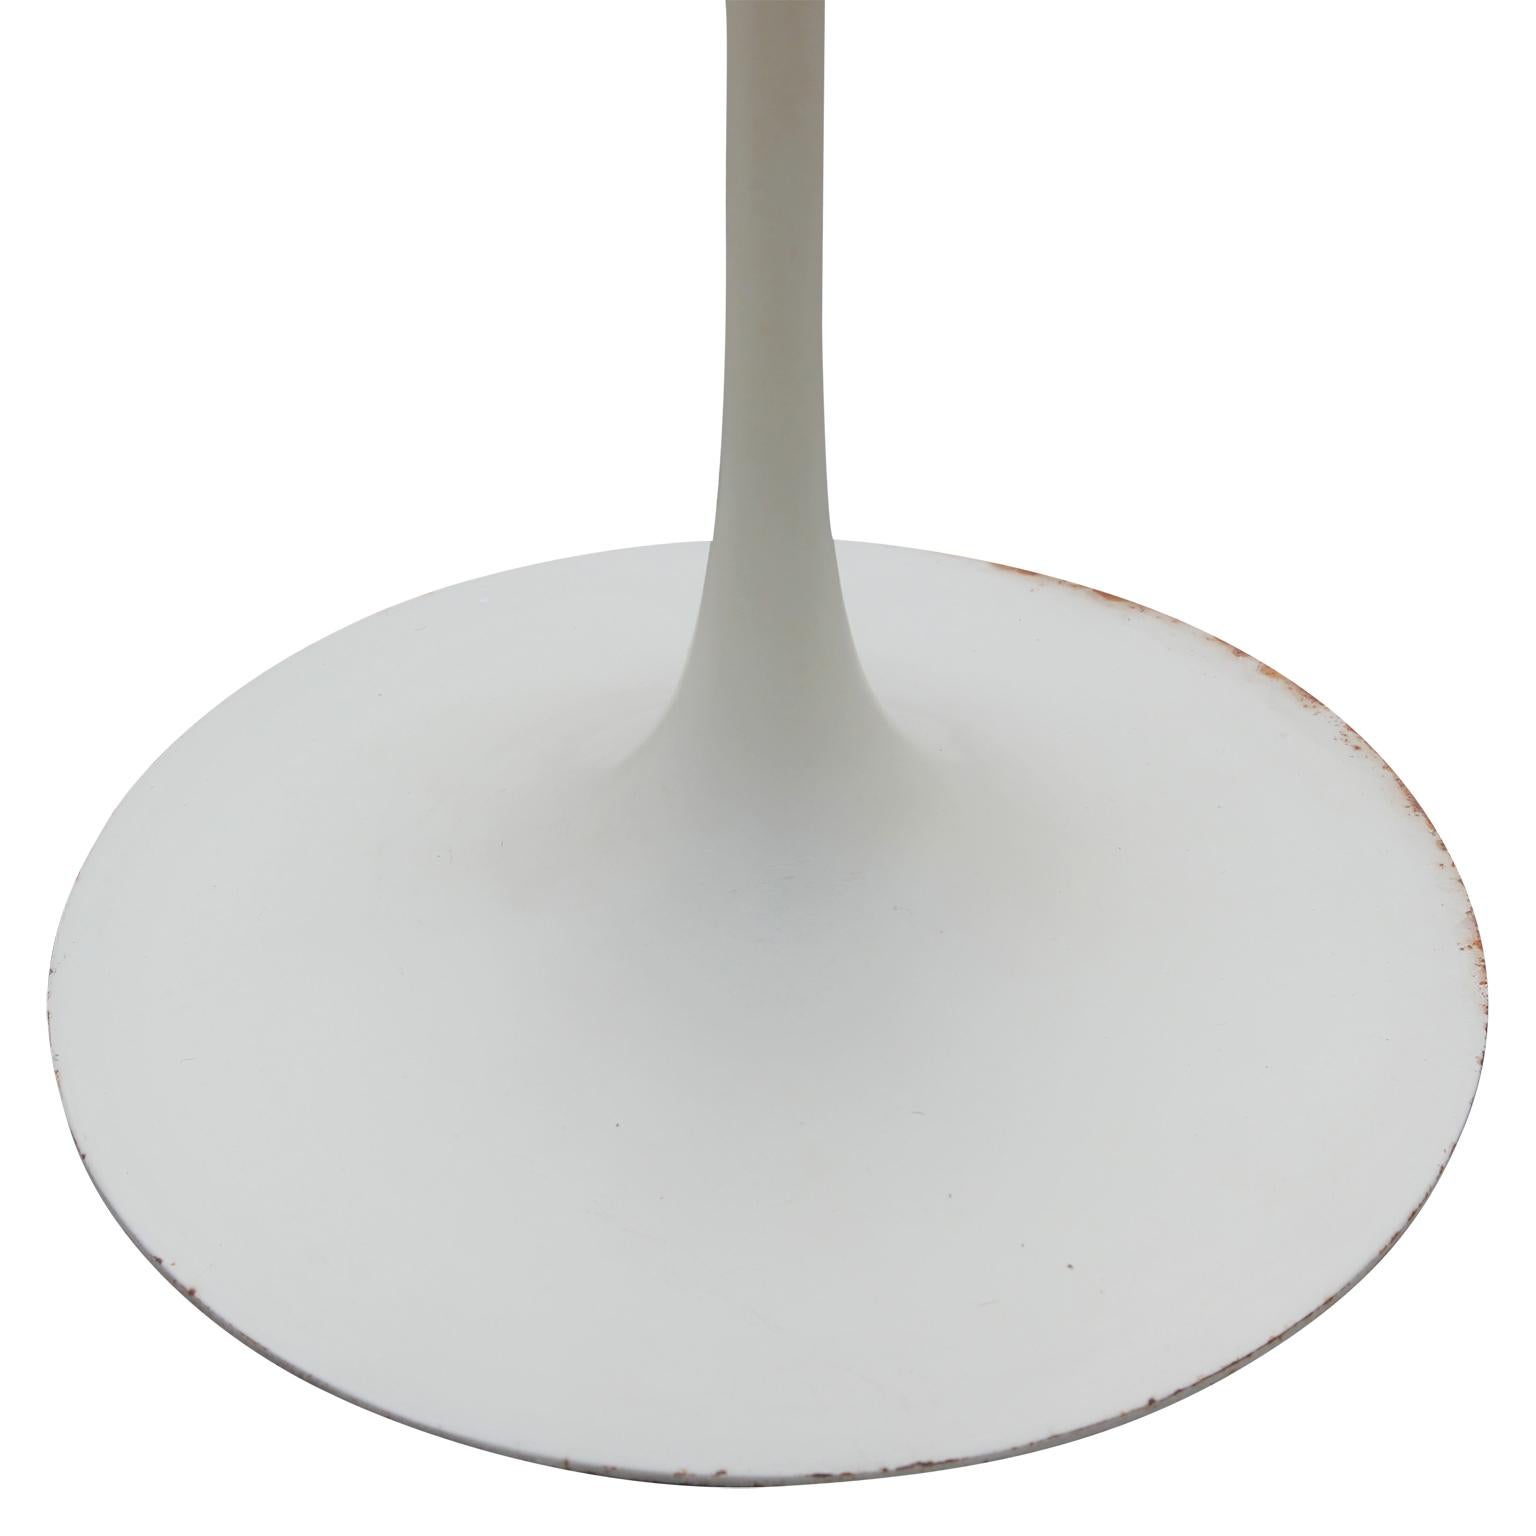 Powder-Coated Mid-Century Modern Eero Saarinen for Knoll Round Tulip Side Table